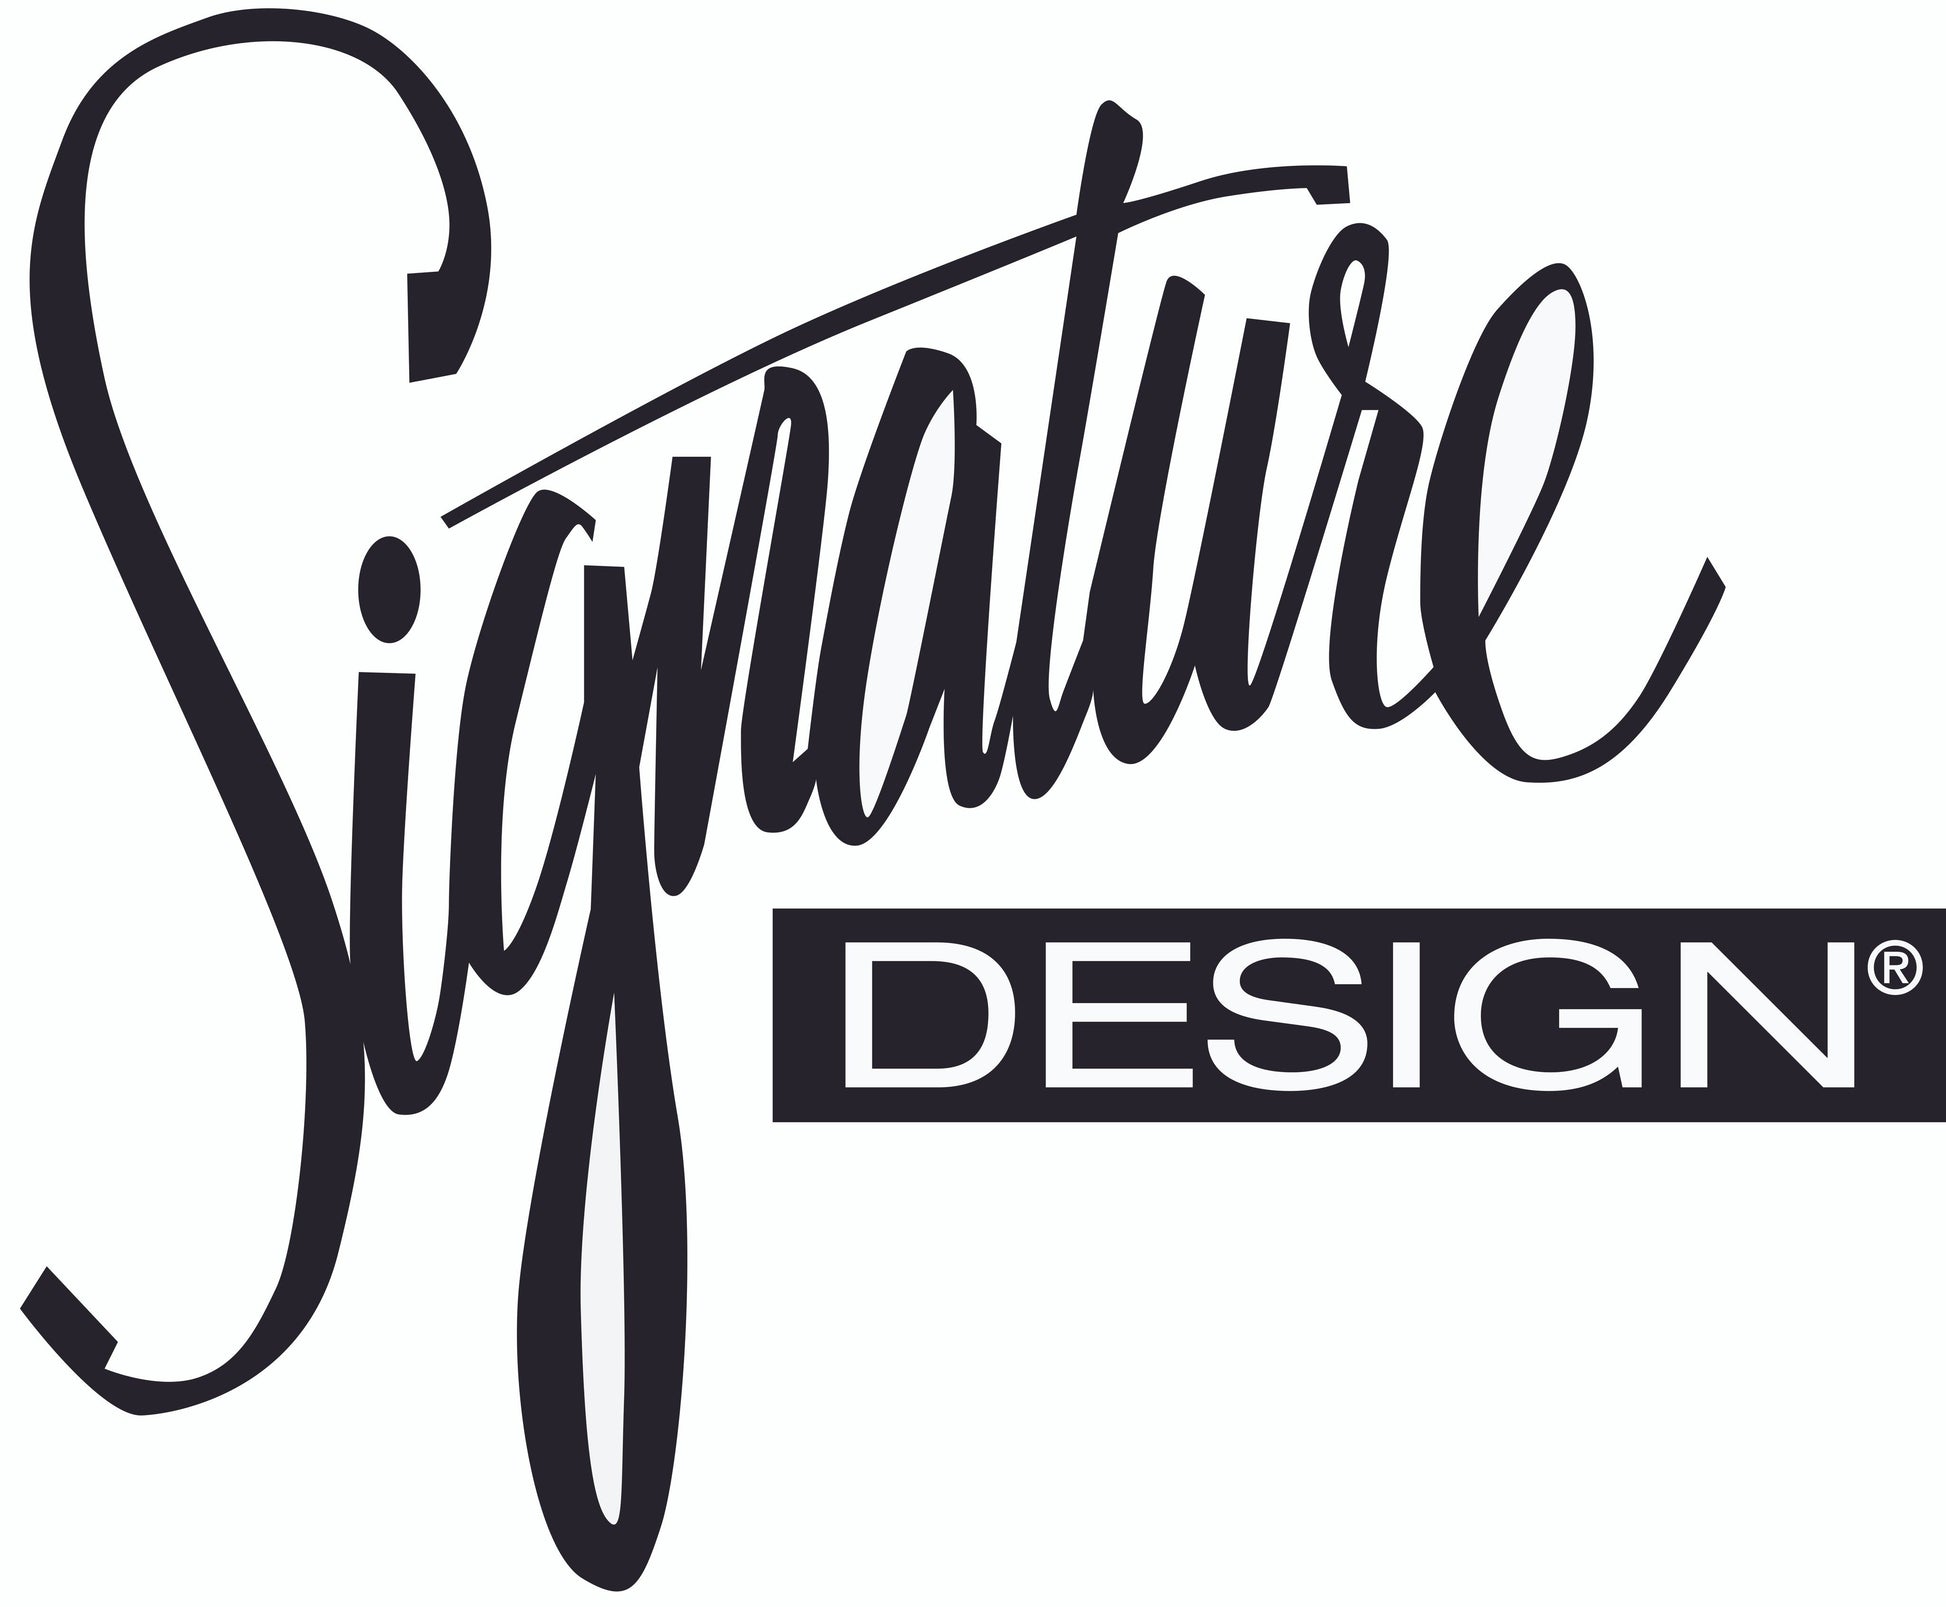 Wyndahl Dining Chair (Set of 2) Signature Design by Ashley®